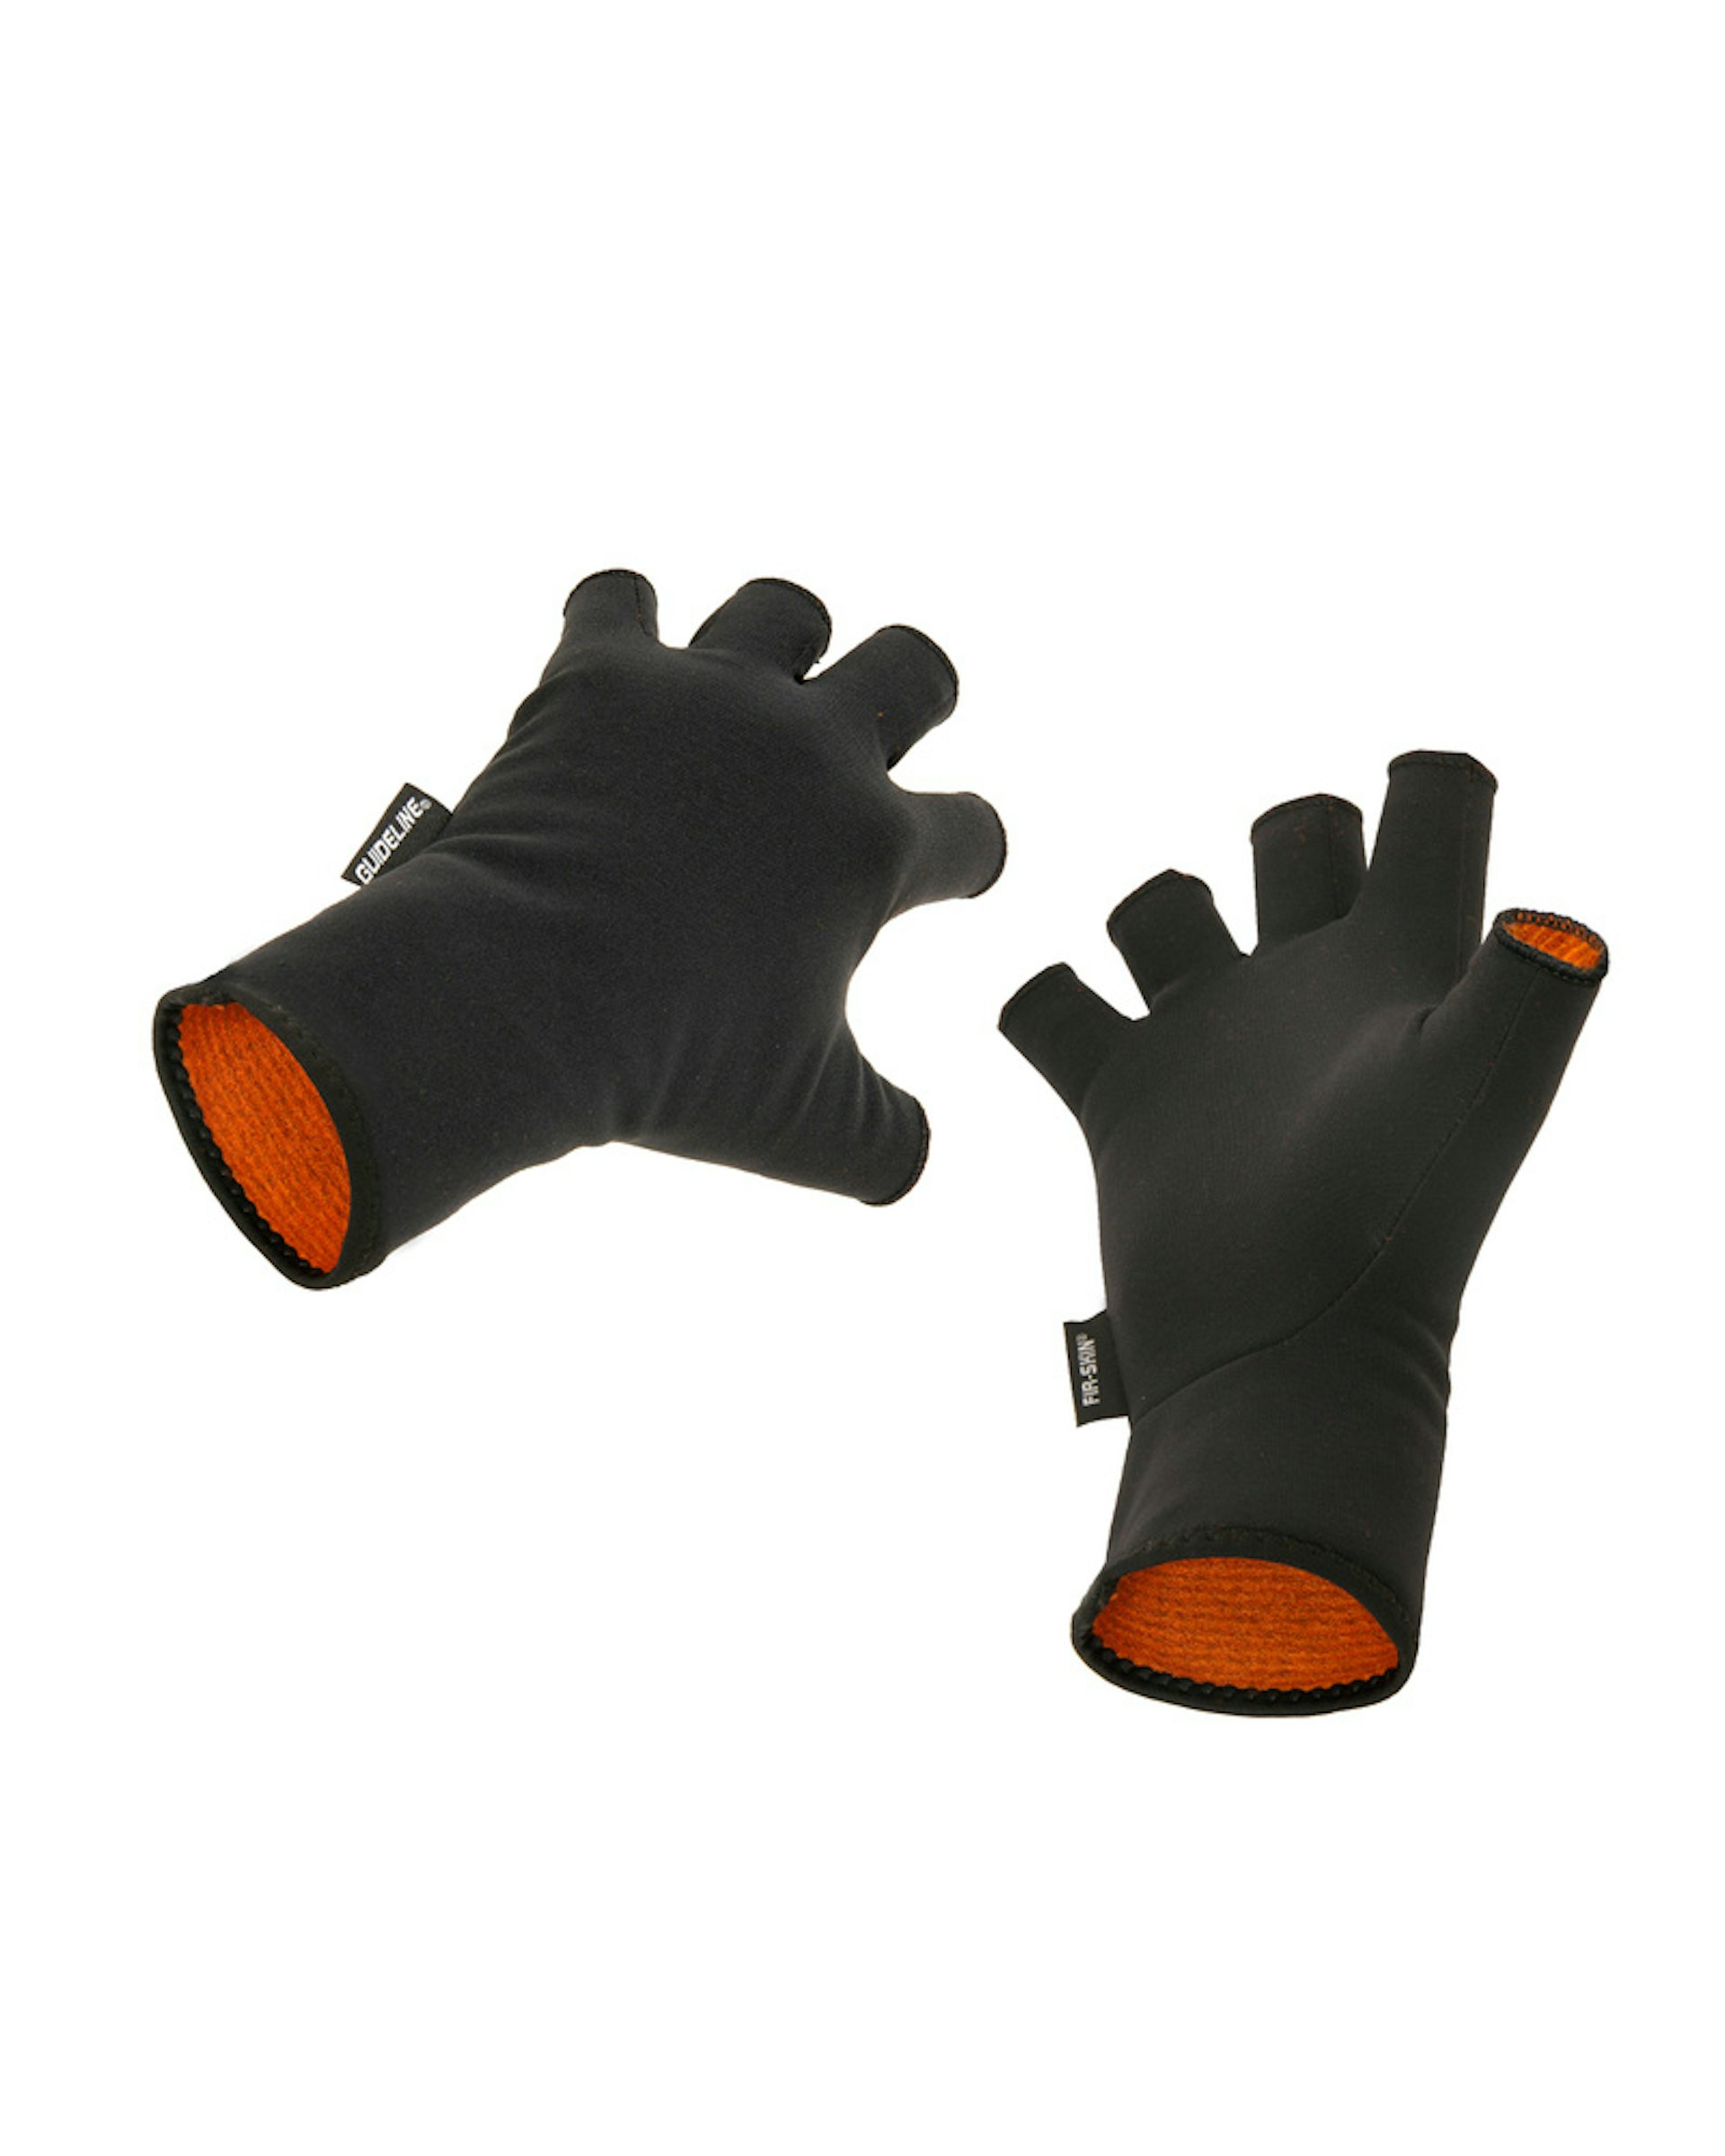 FIR-SKIN CGX Fingerless Gloves L (slide 1 of 1)